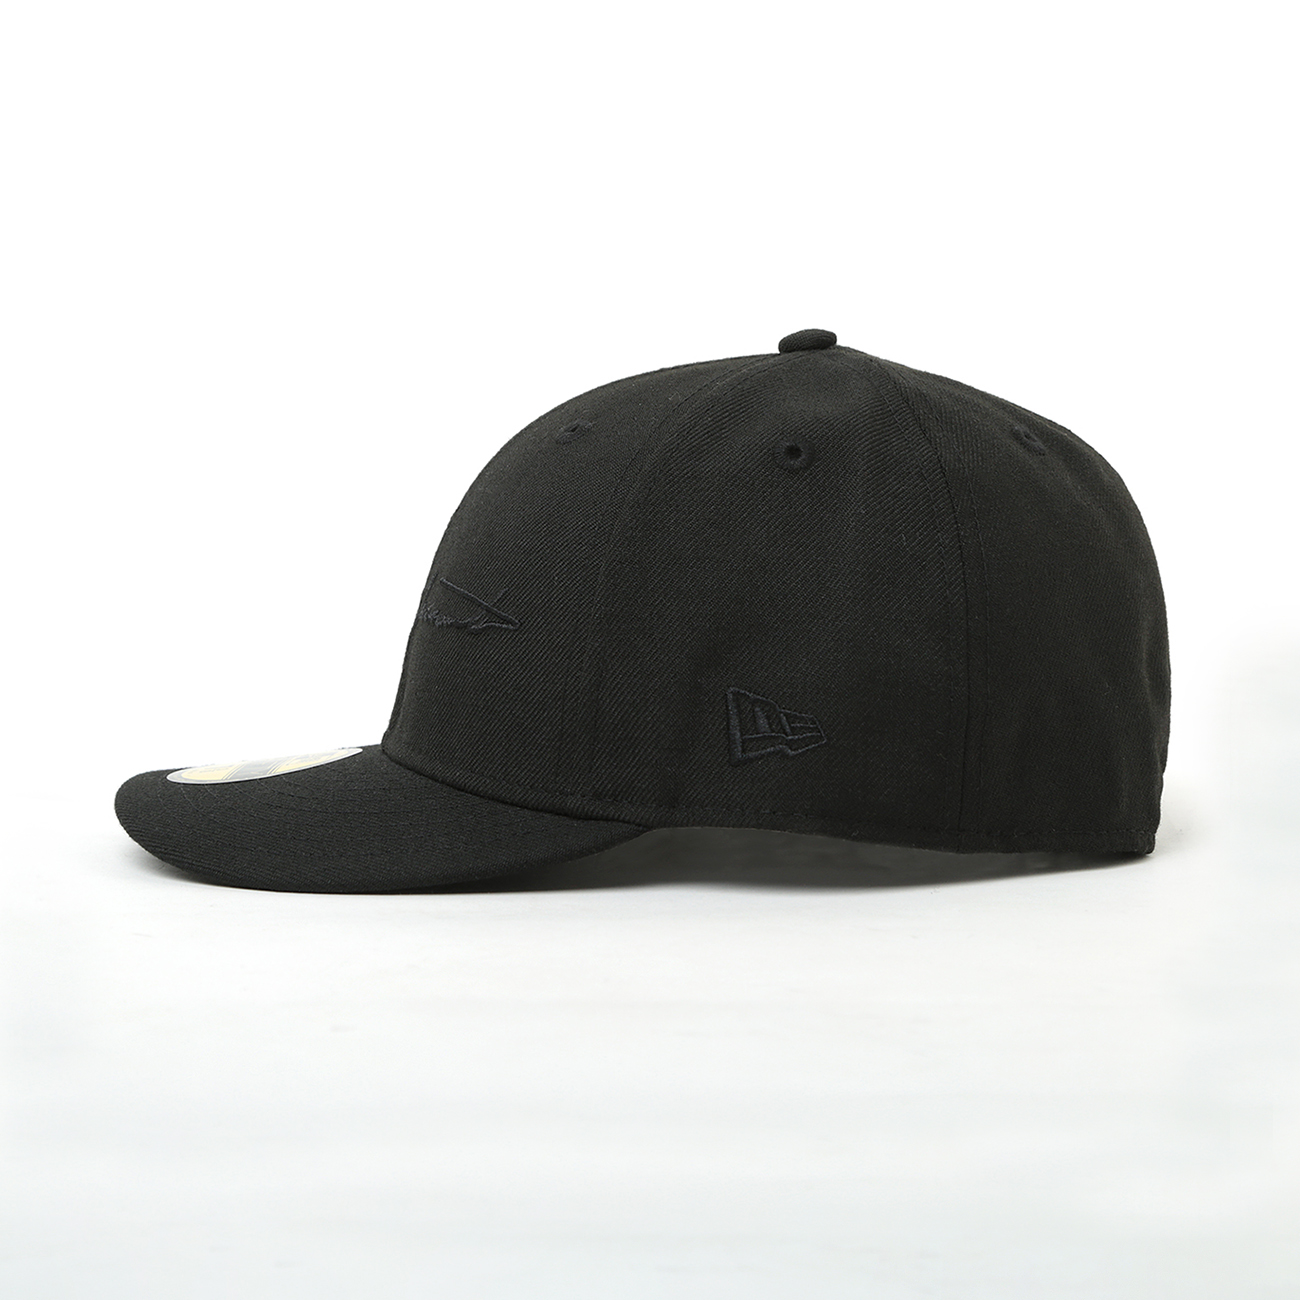 HZ-H92-976-1 New Era Low Profile 59FIFTY CAP - Black